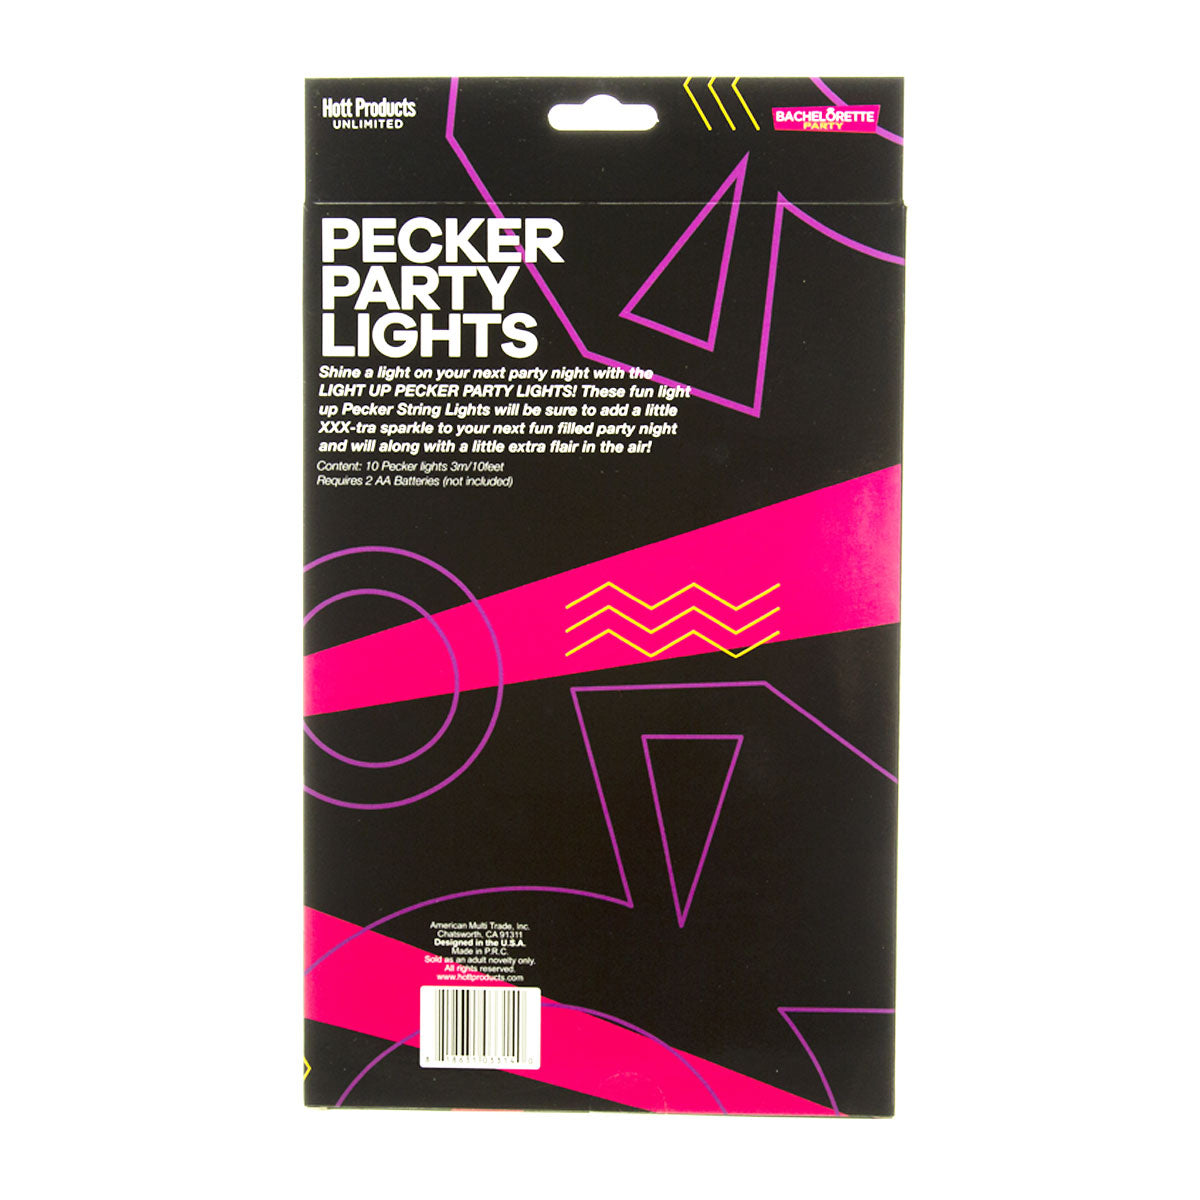 Hott Products - Bachelorette Party Pecker Party Lights – 10 ft.